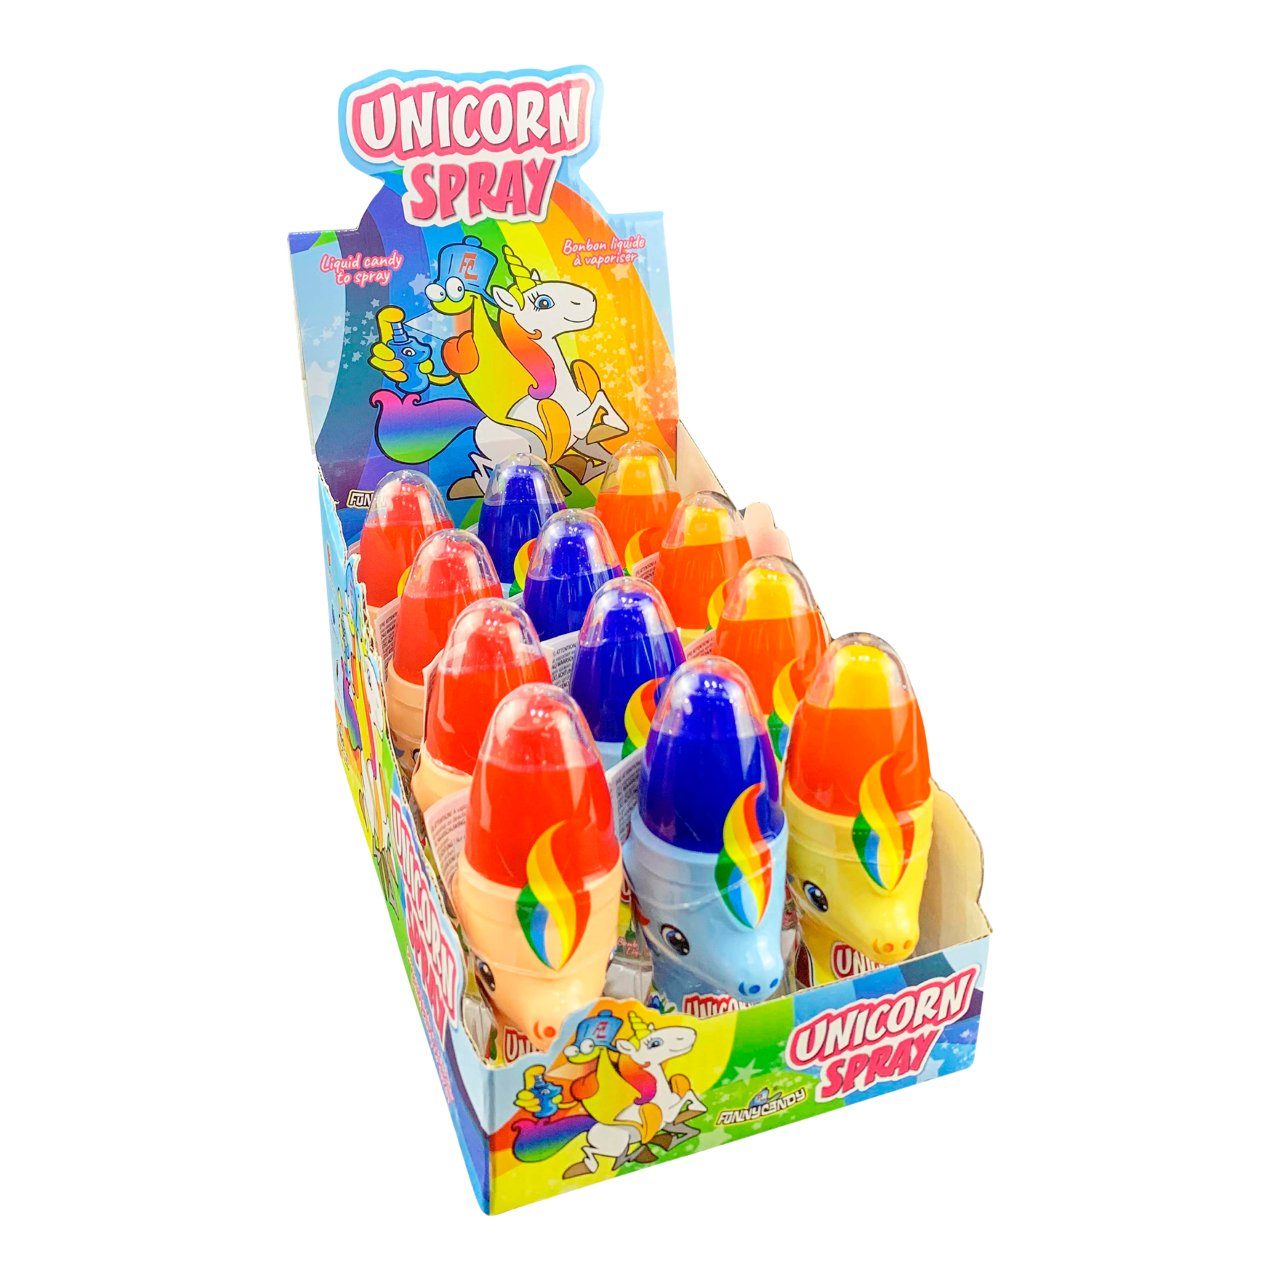 Unicorn candy spray